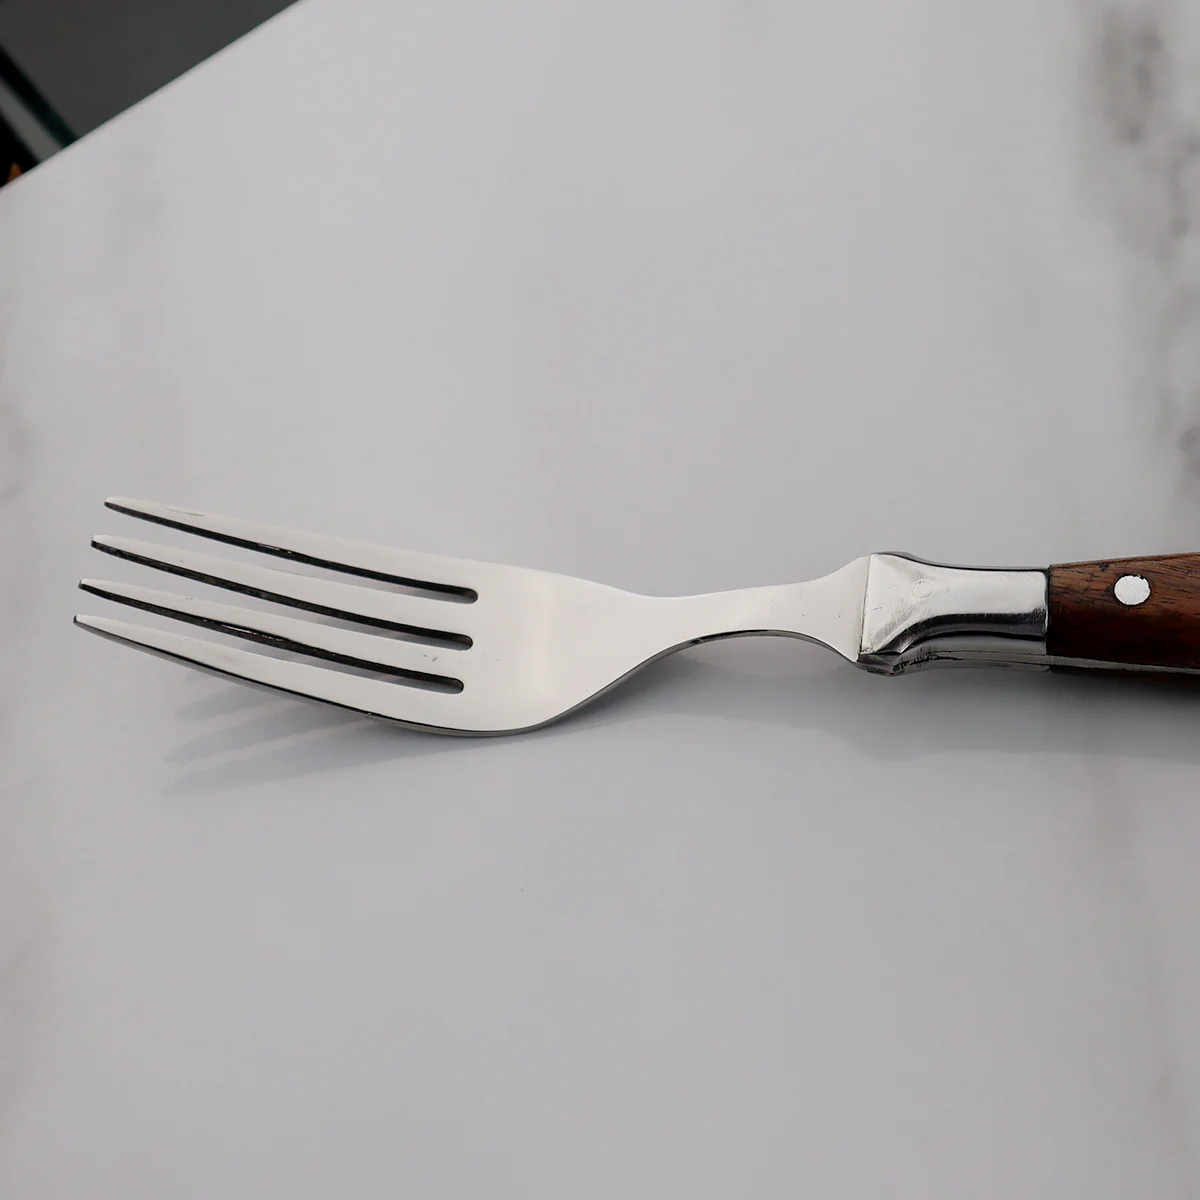 Chef Supreme Quality Steak Fork - Wooden Handle